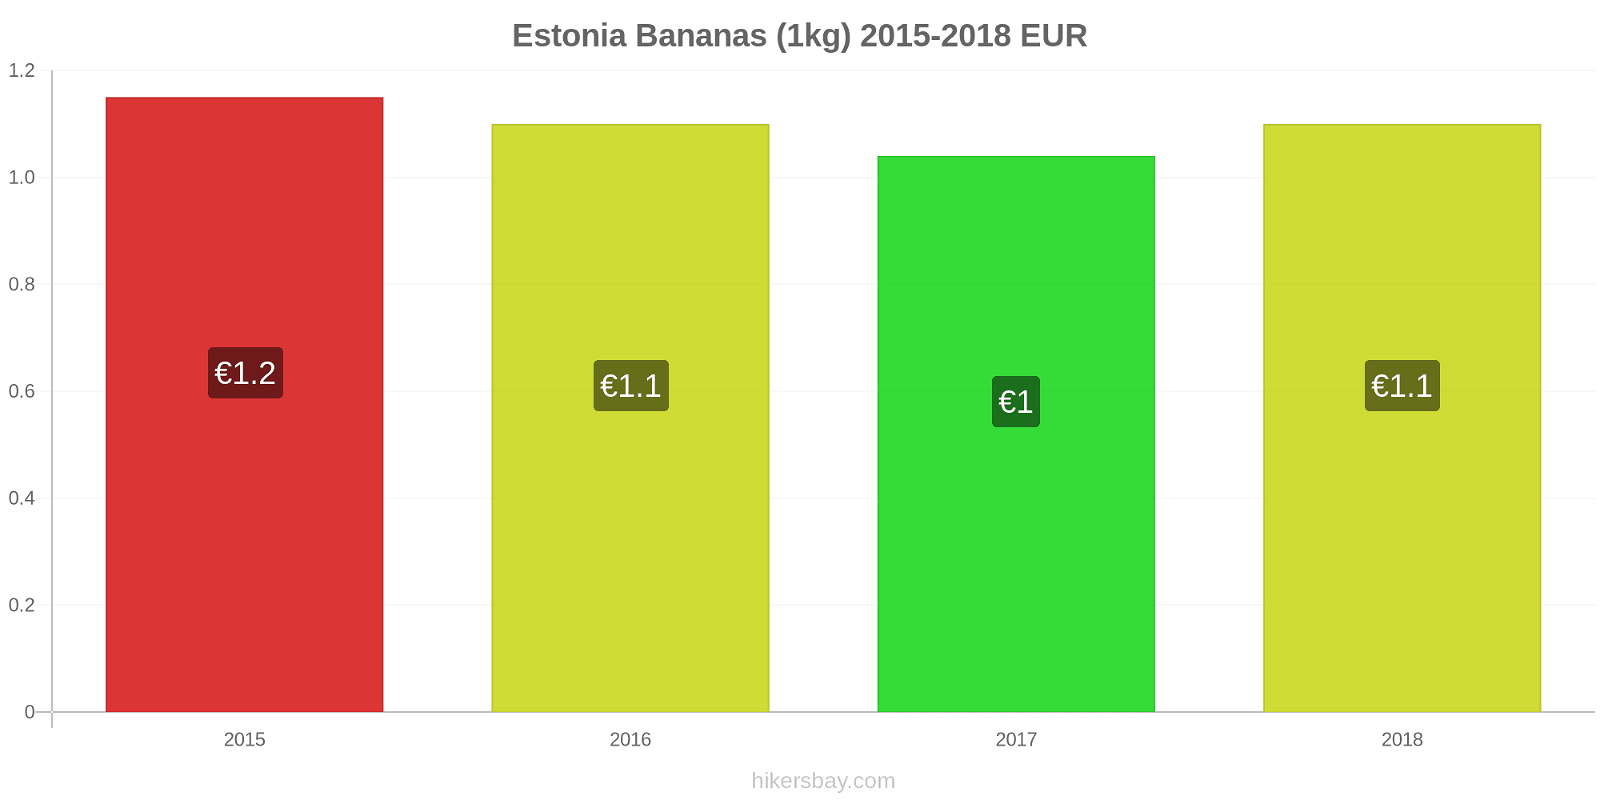 Estonia price changes Bananas (1kg) hikersbay.com